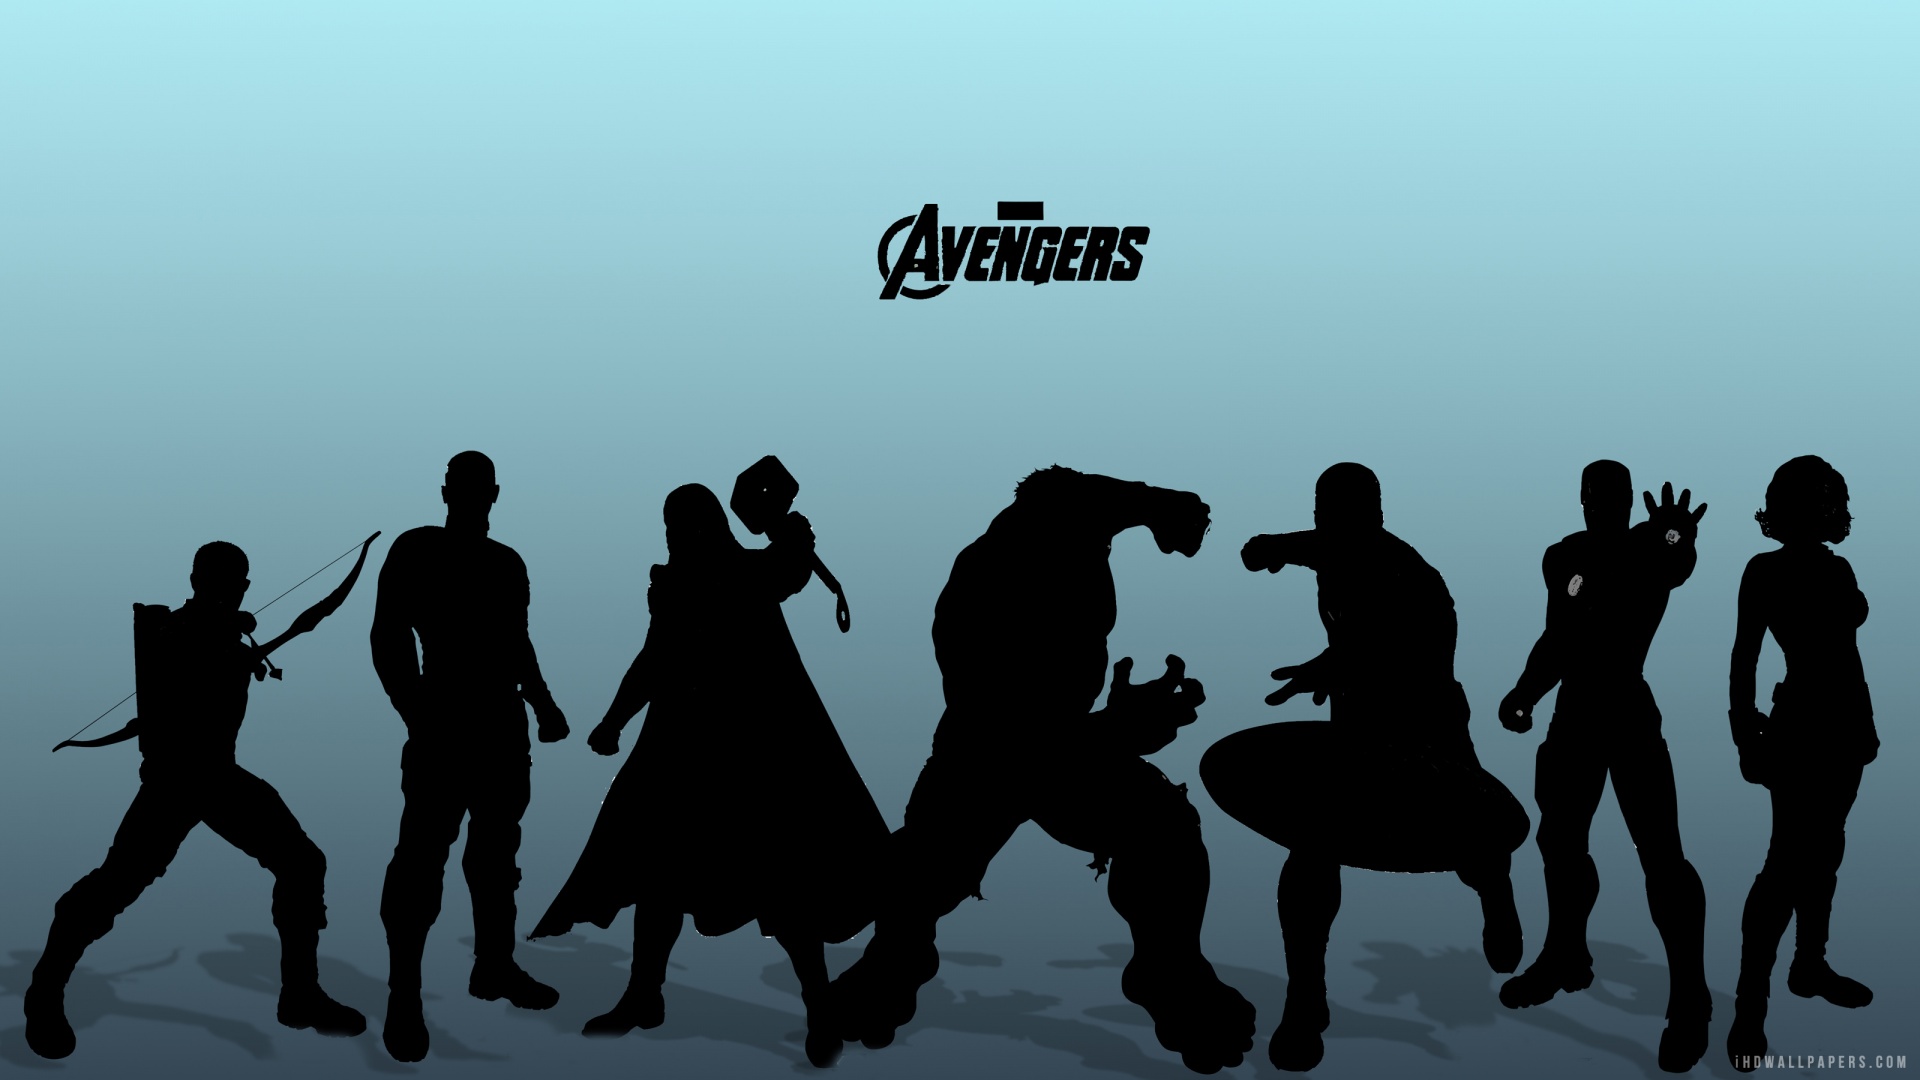  Download Avengers Superheroes WallpaperBackground in 1920x1080 HD